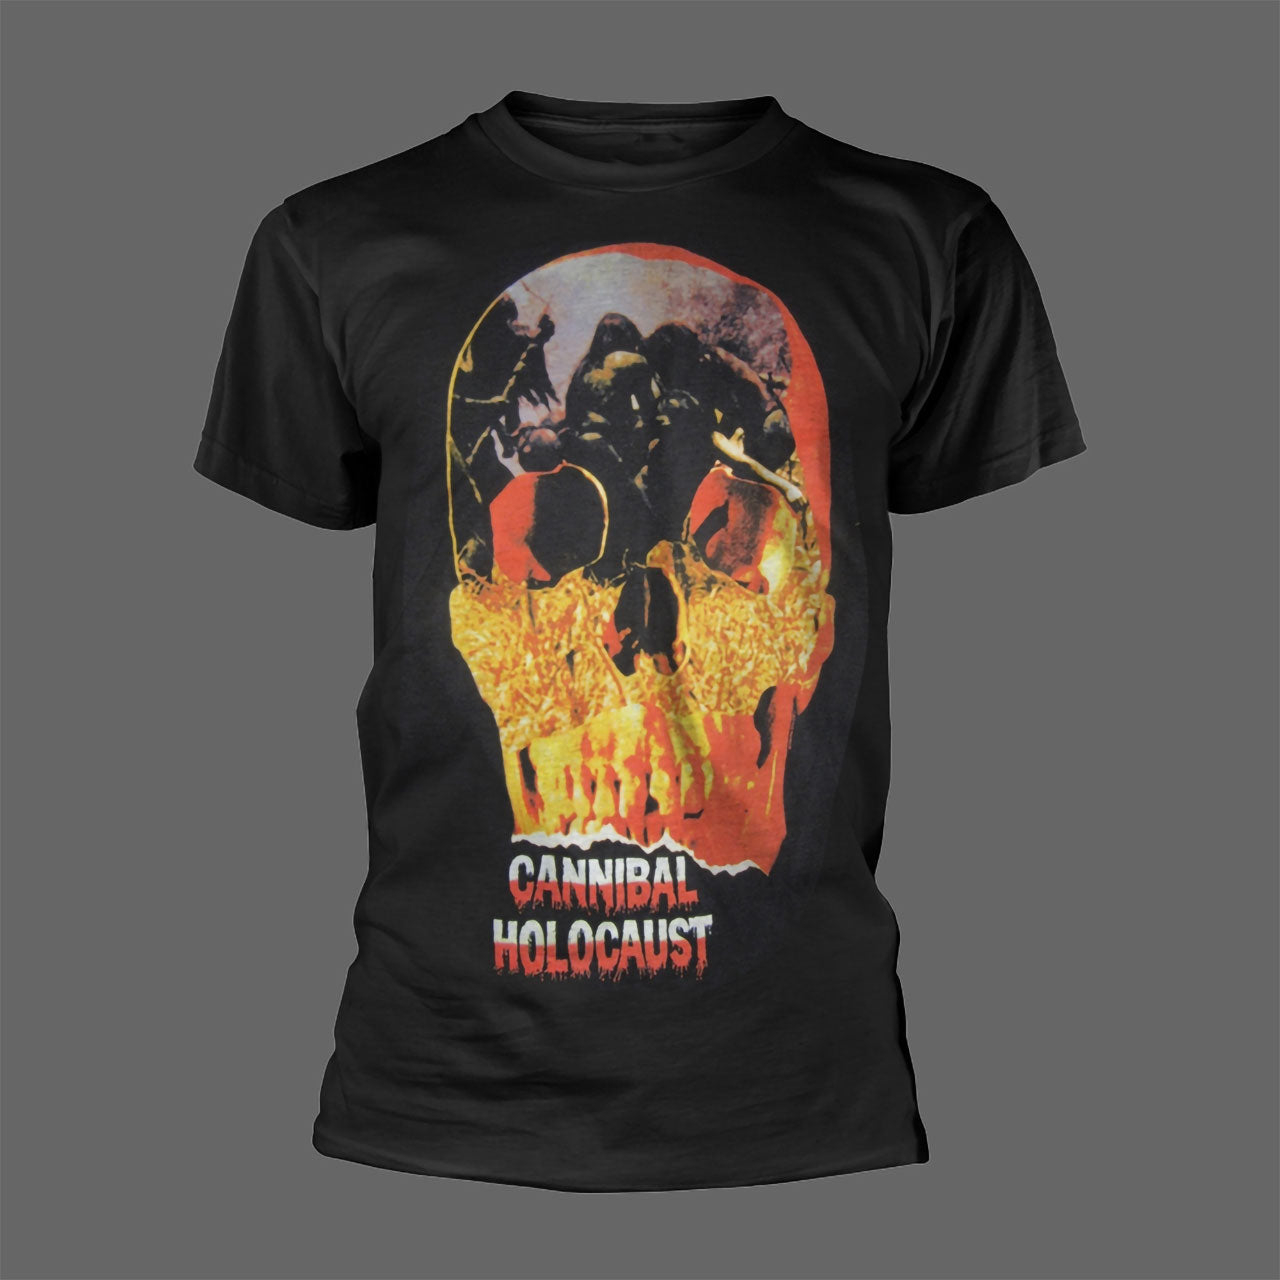 Cannibal Holocaust (1980) (T-Shirt)